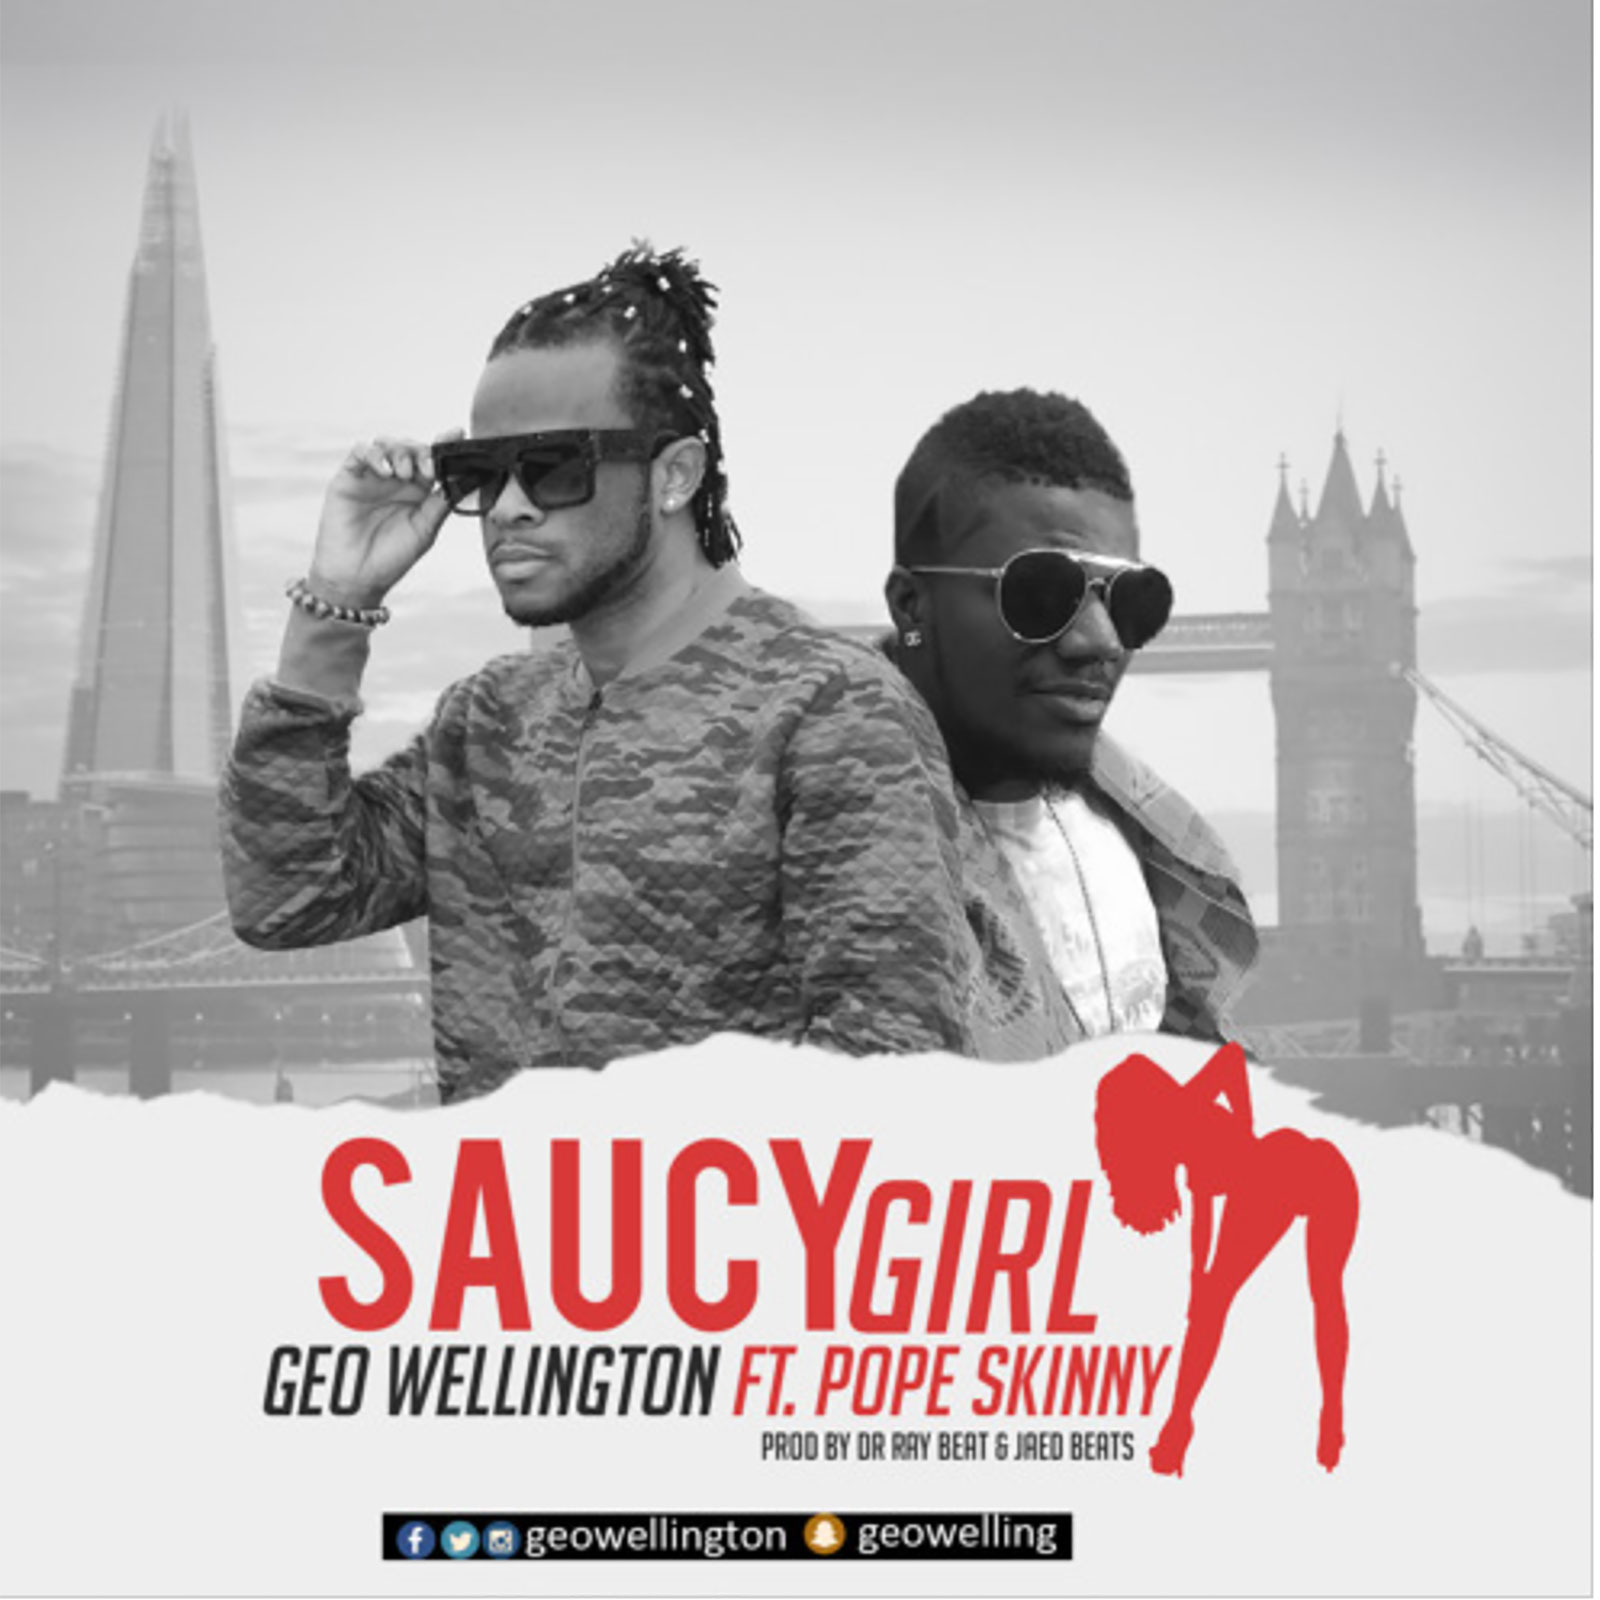 Saucy Girl by Geo Wellington feat. Pope Skinny